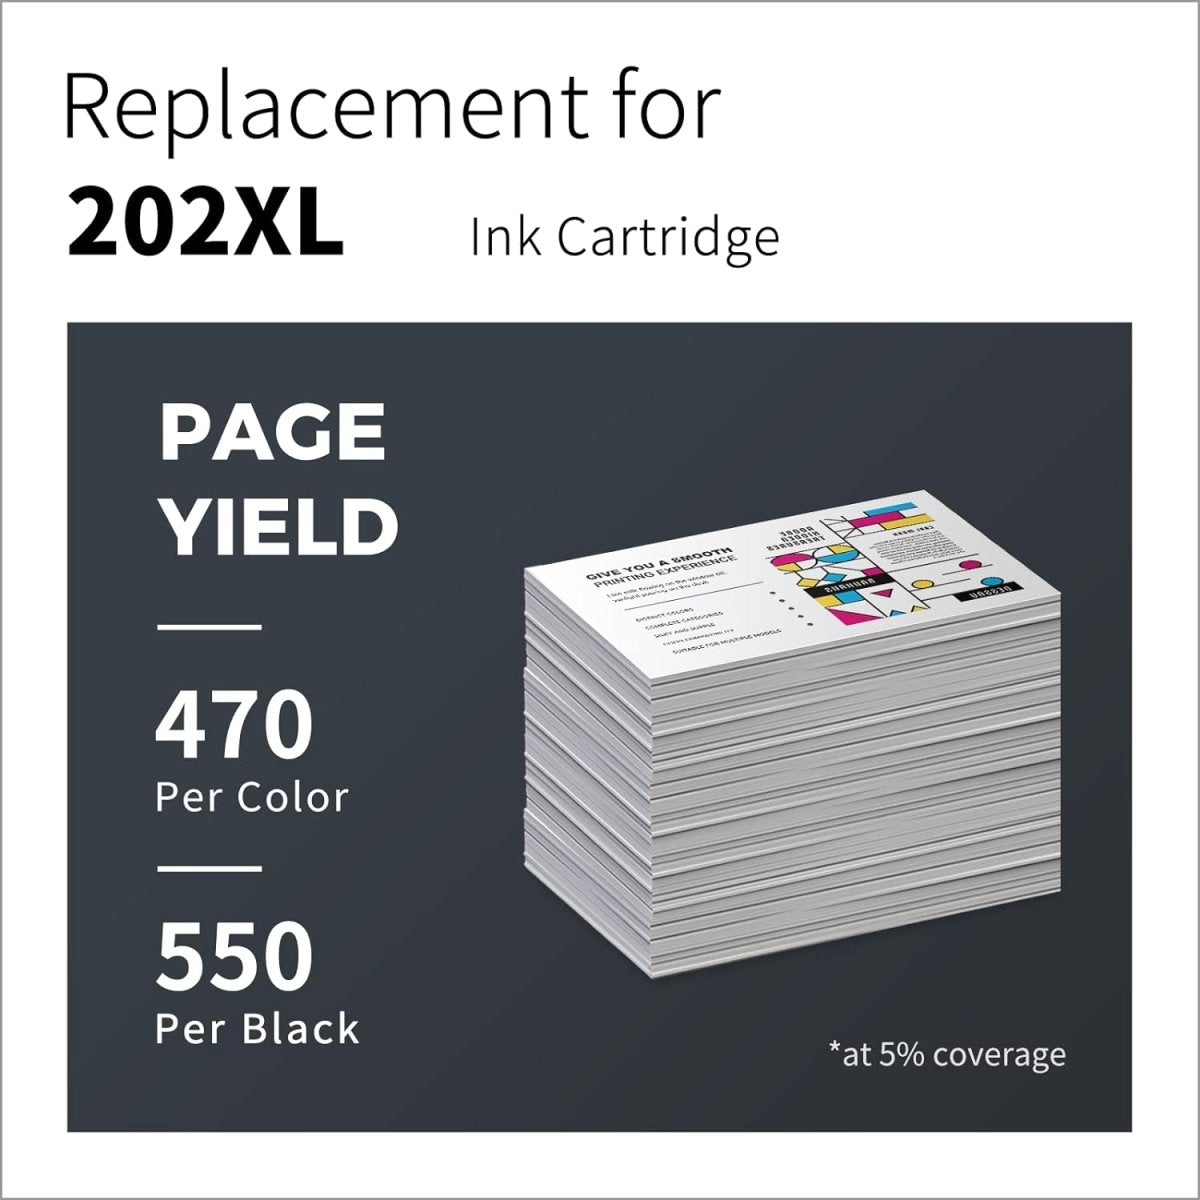 202XL Remanufactured Ink Cartridge use with Epson Workforce Printer (Black, Cyan, Magenta, Yellow, 4-Pack) - Linford Office:Printer Ink & Toner Cartridge